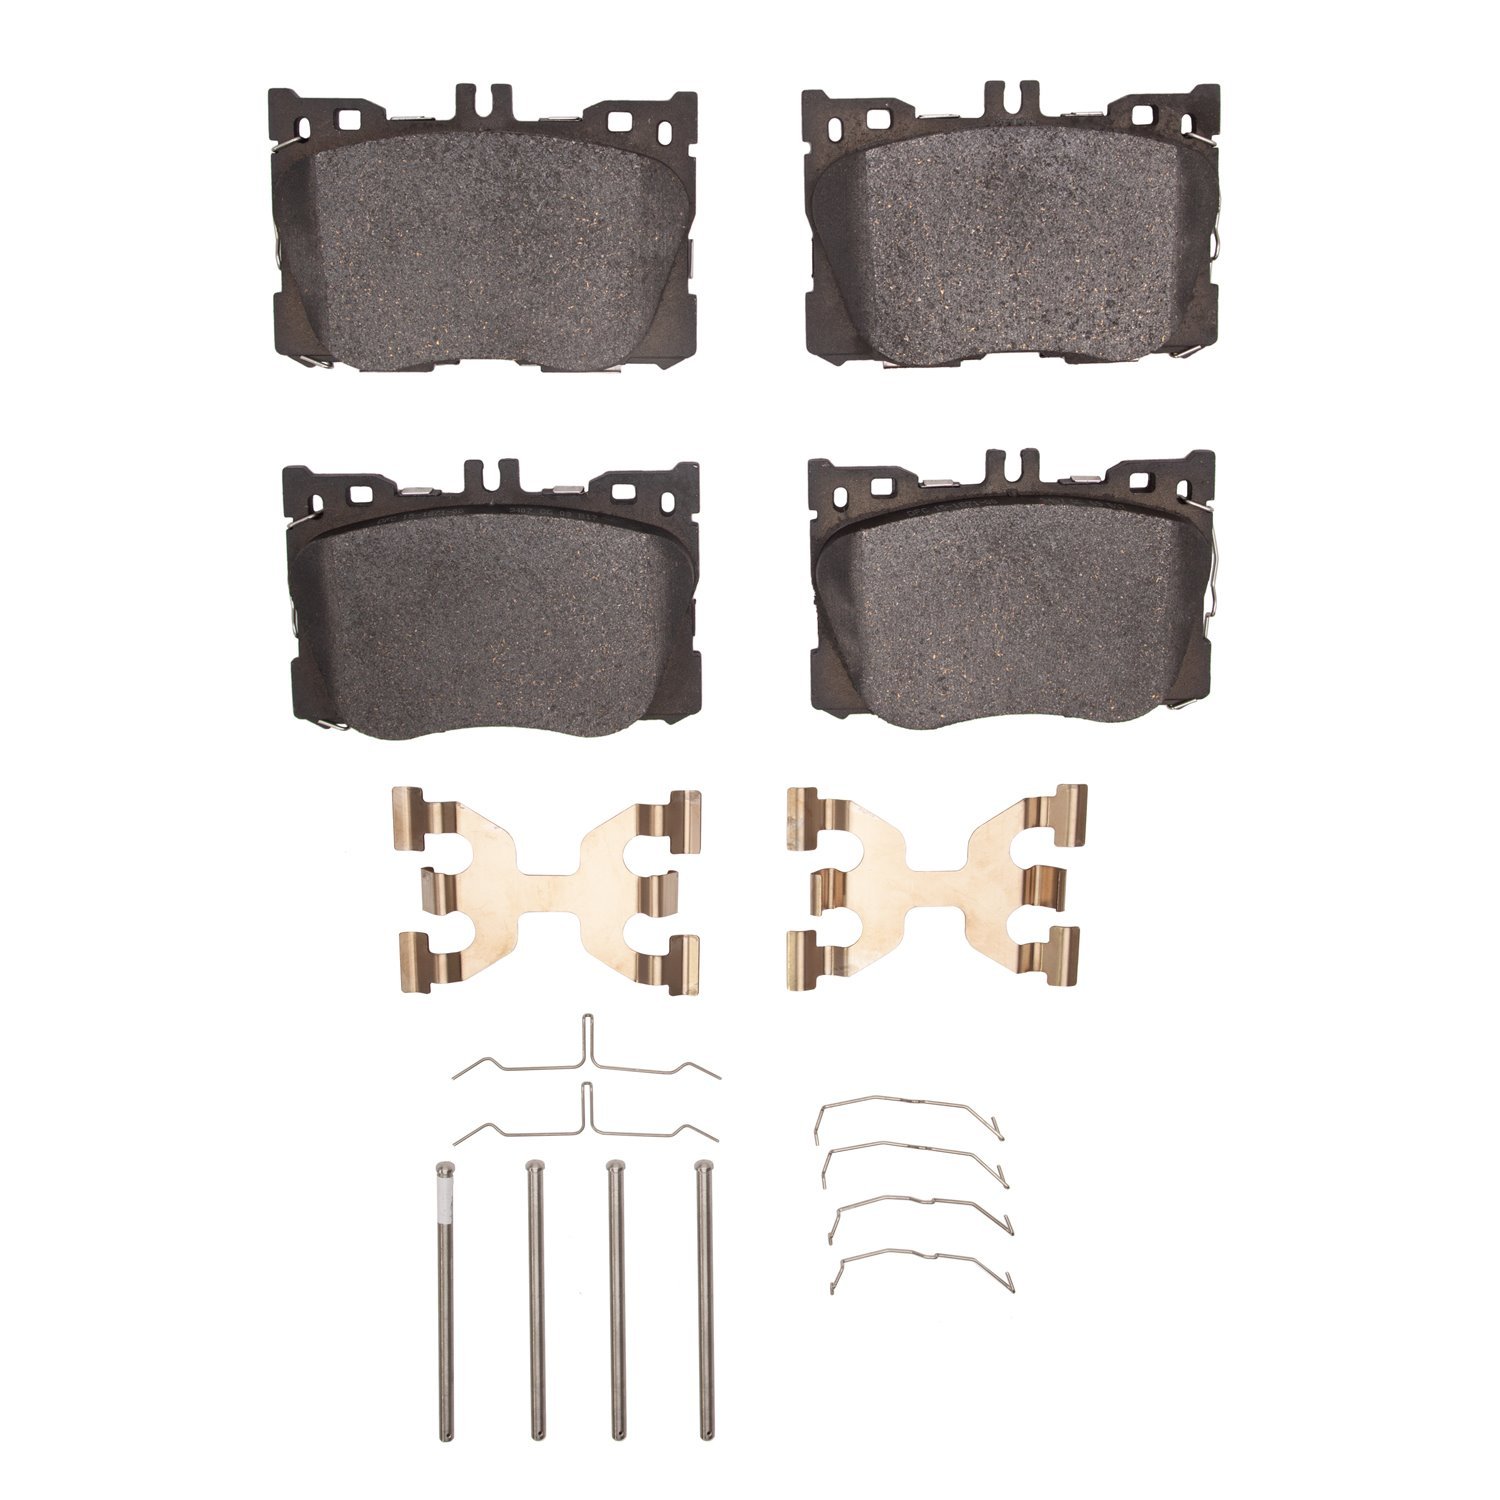 1310-1871-01 3000-Series Ceramic Brake Pads & Hardware Kit, Fits Select Mercedes-Benz, Position: Front